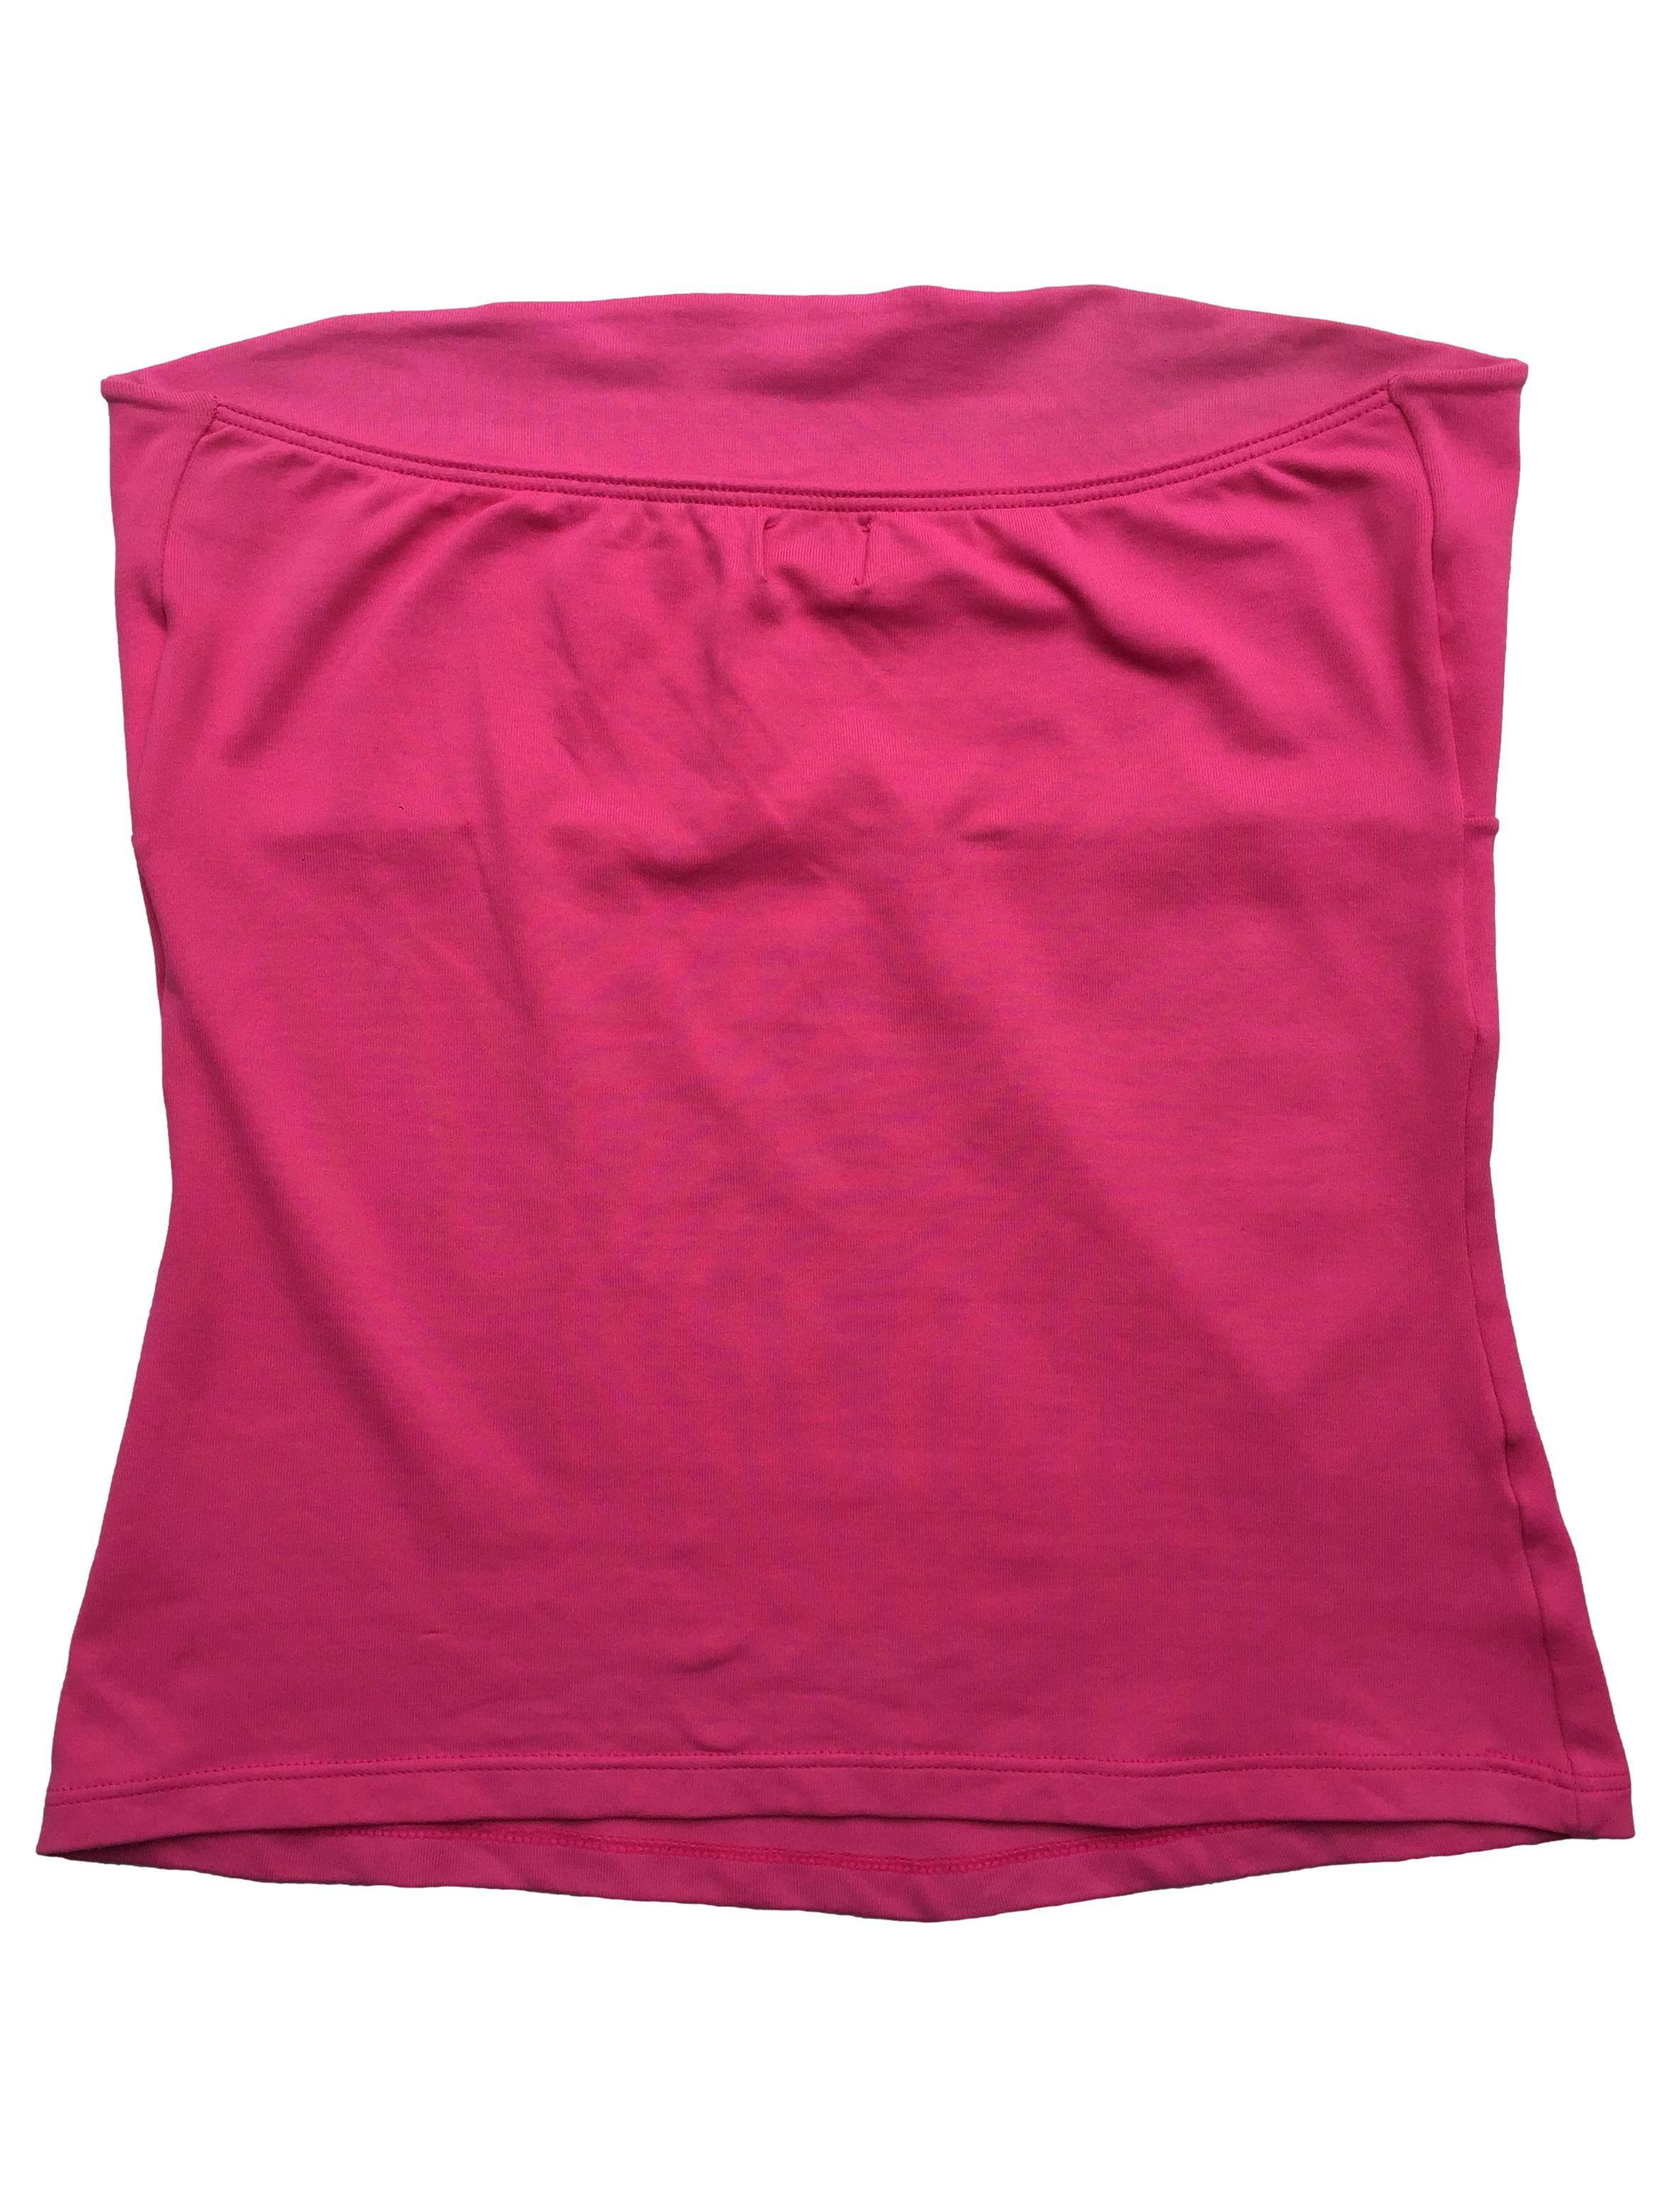 Top strapple Bershka rosado, ligeramente stretch. Busto: 66 (sin estirar), Largo: 35cm